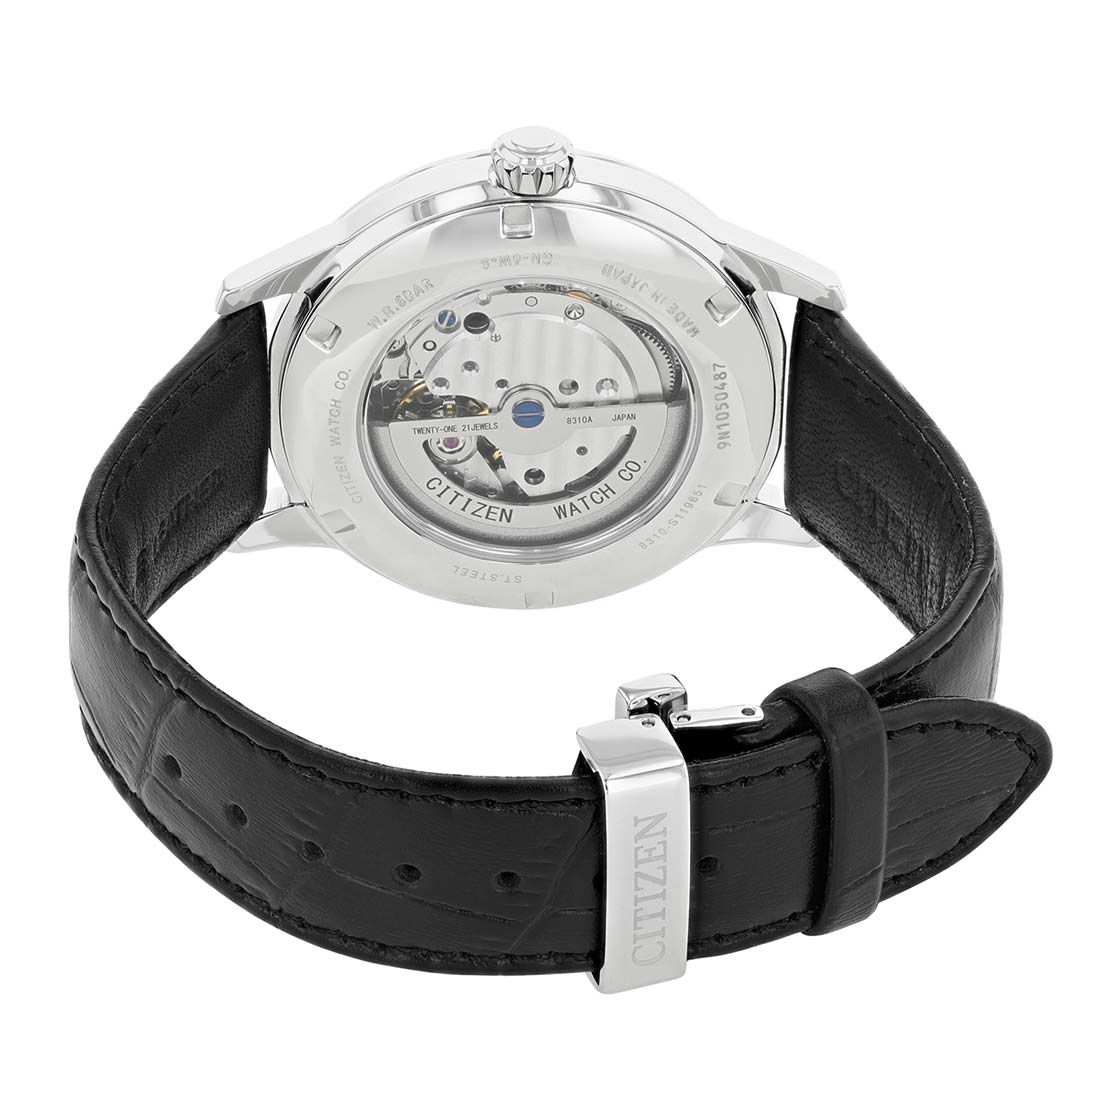 Citizen Men's Automatic White Dial Watch - NK0000-10A